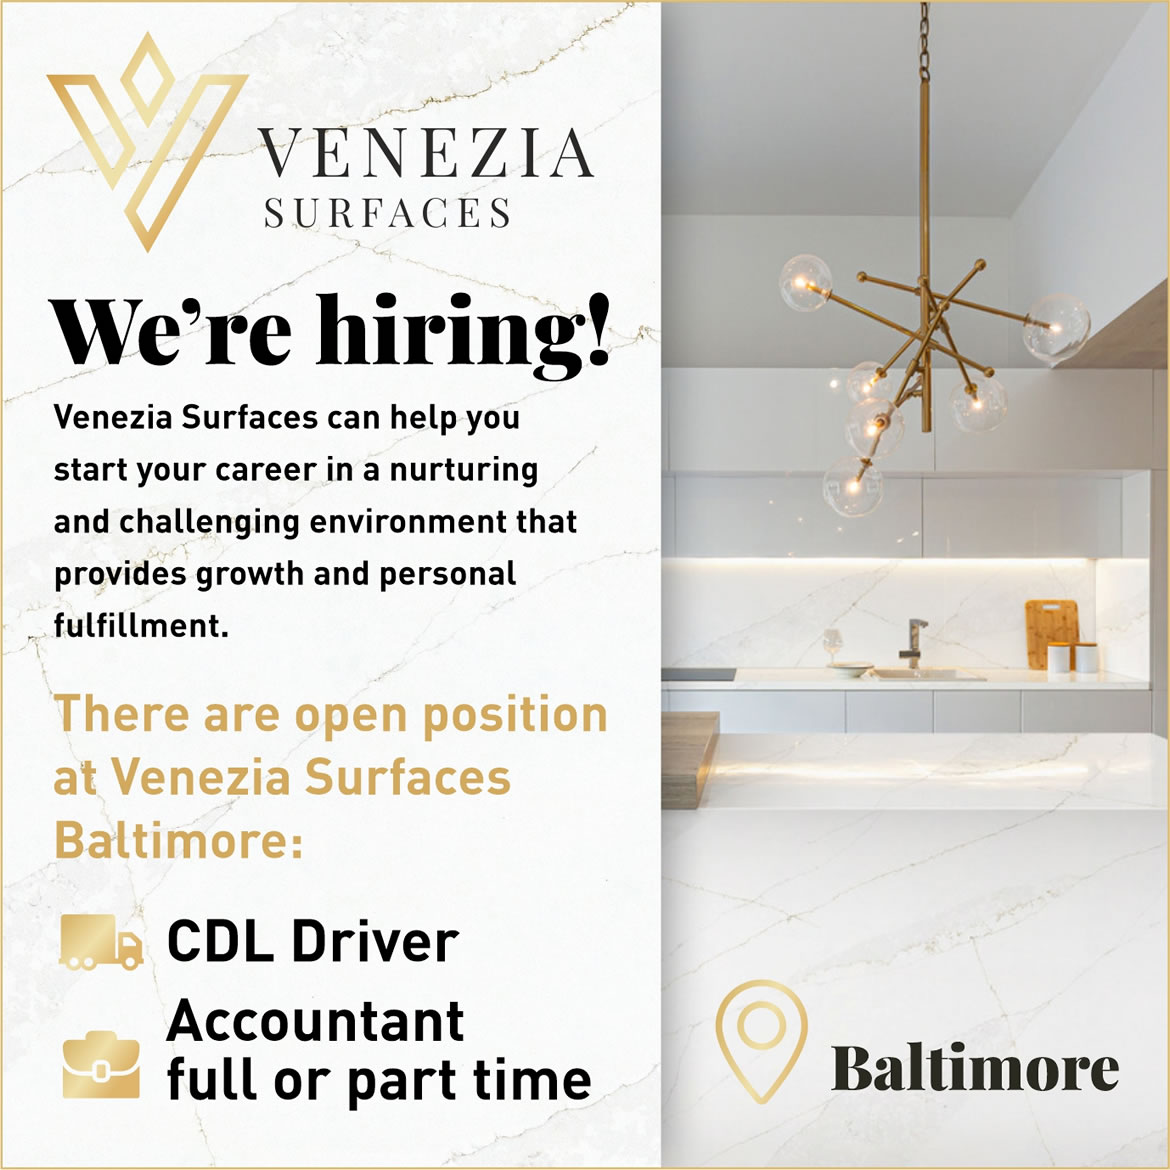 Baltimore! We are hiring!